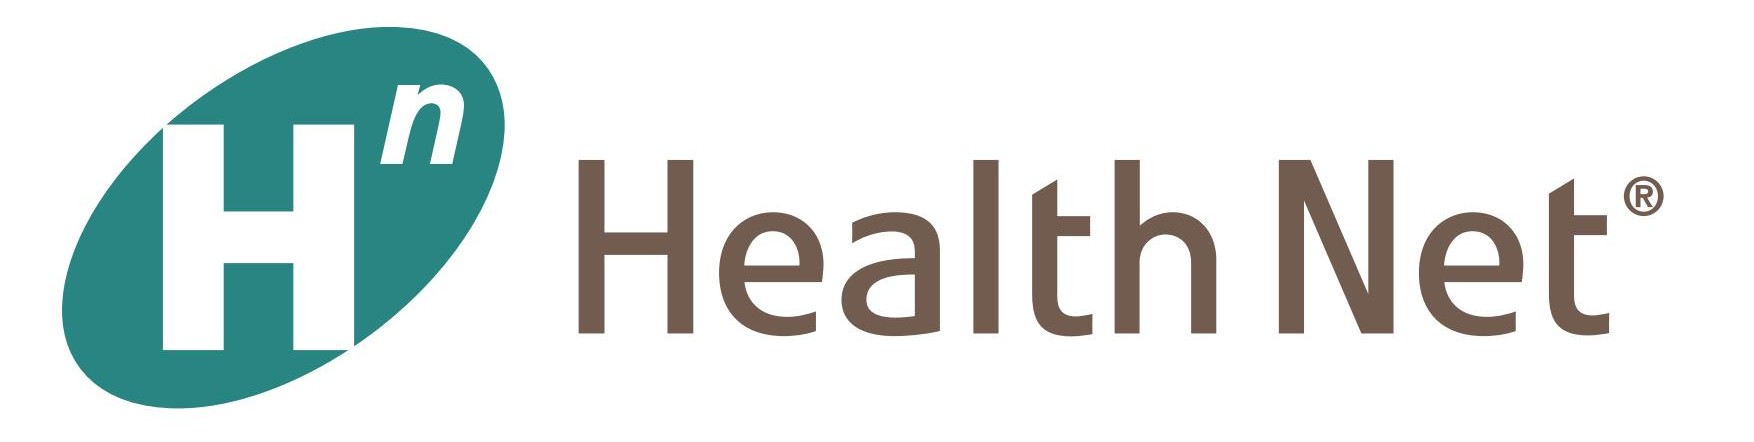 Health Net Brand Logo